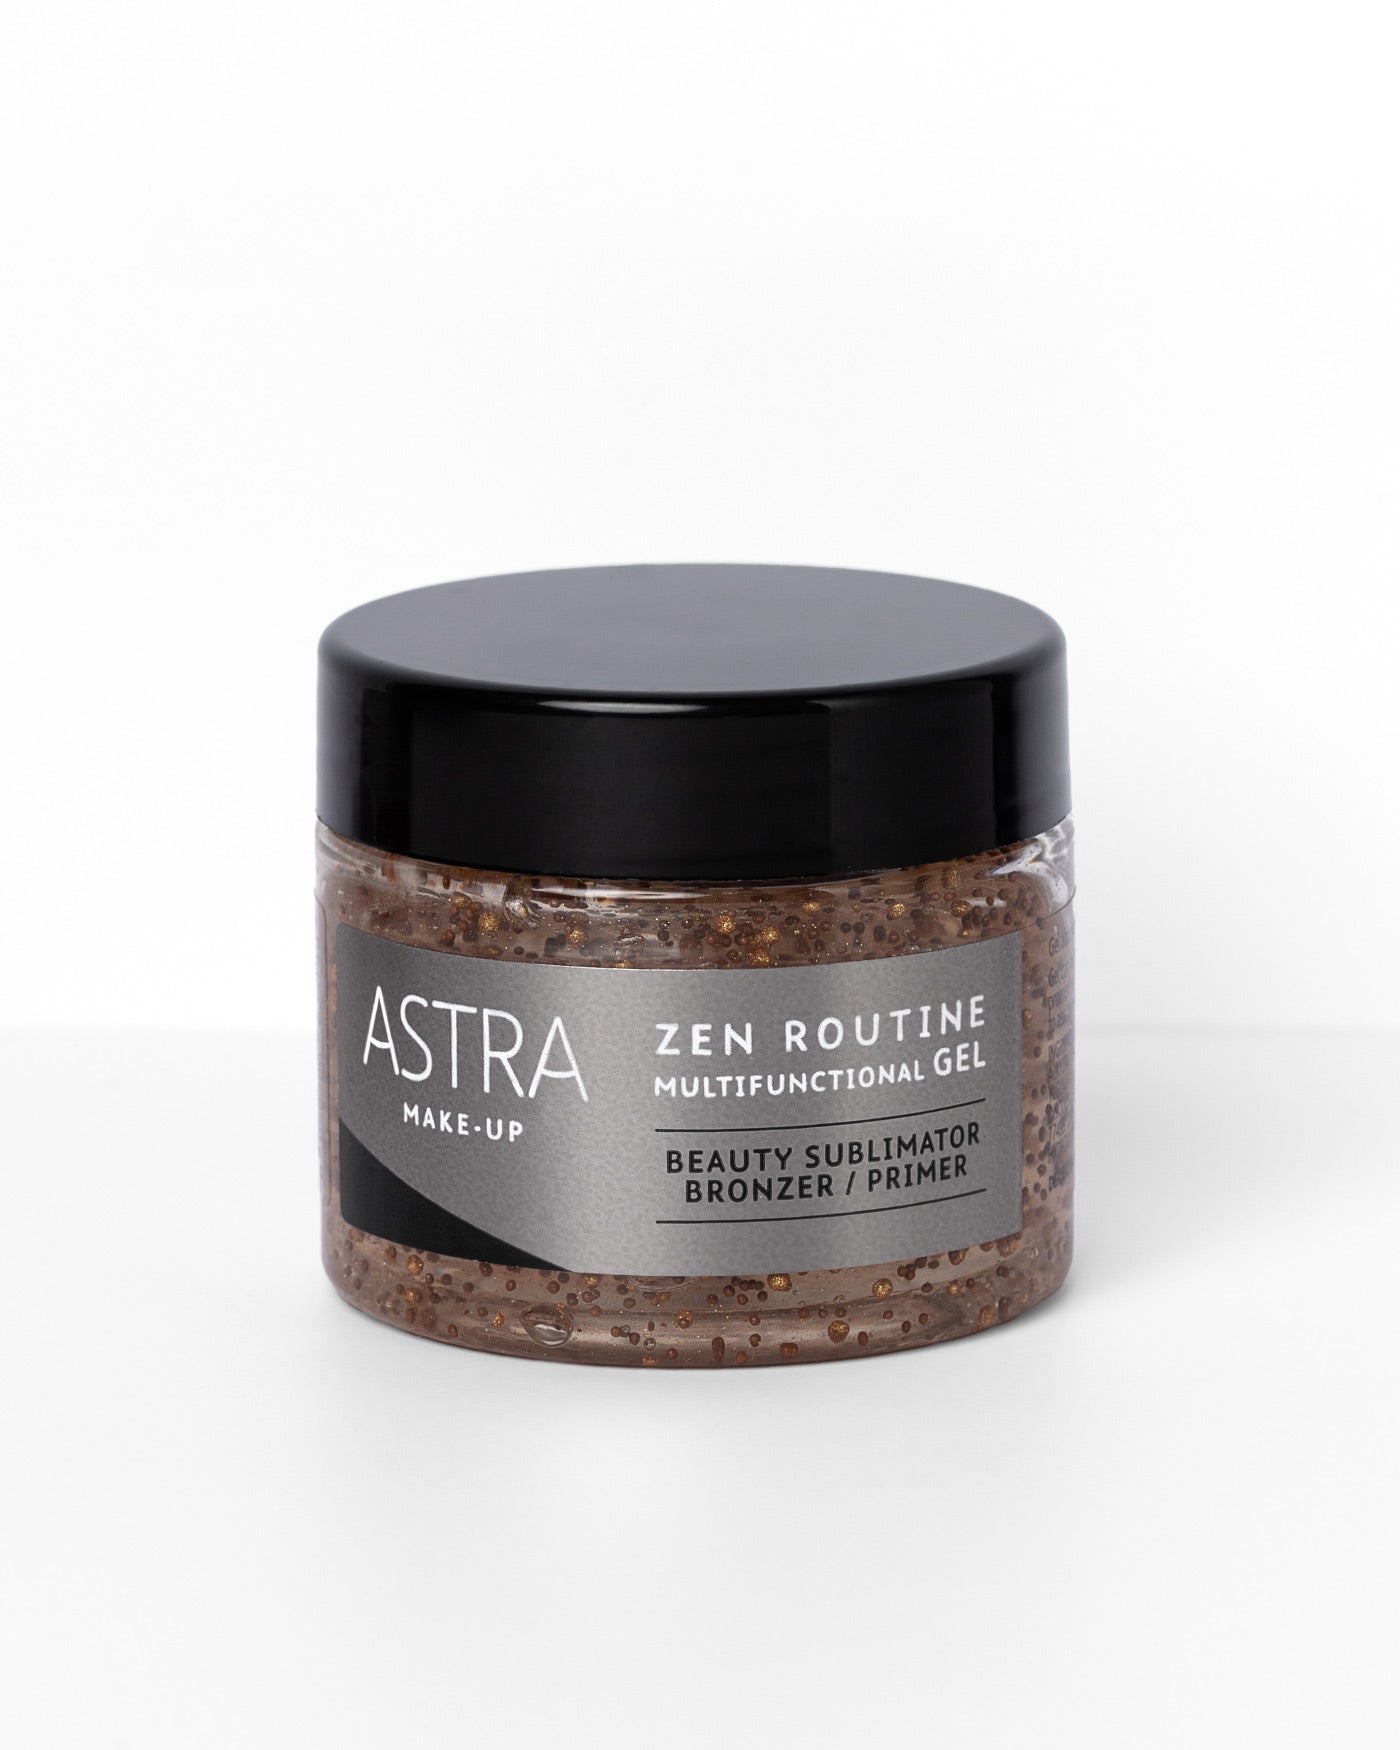 ZEN ROUTINE MULTIFUNCTIONAL GEL - Zen Routine - Astra Make-Up